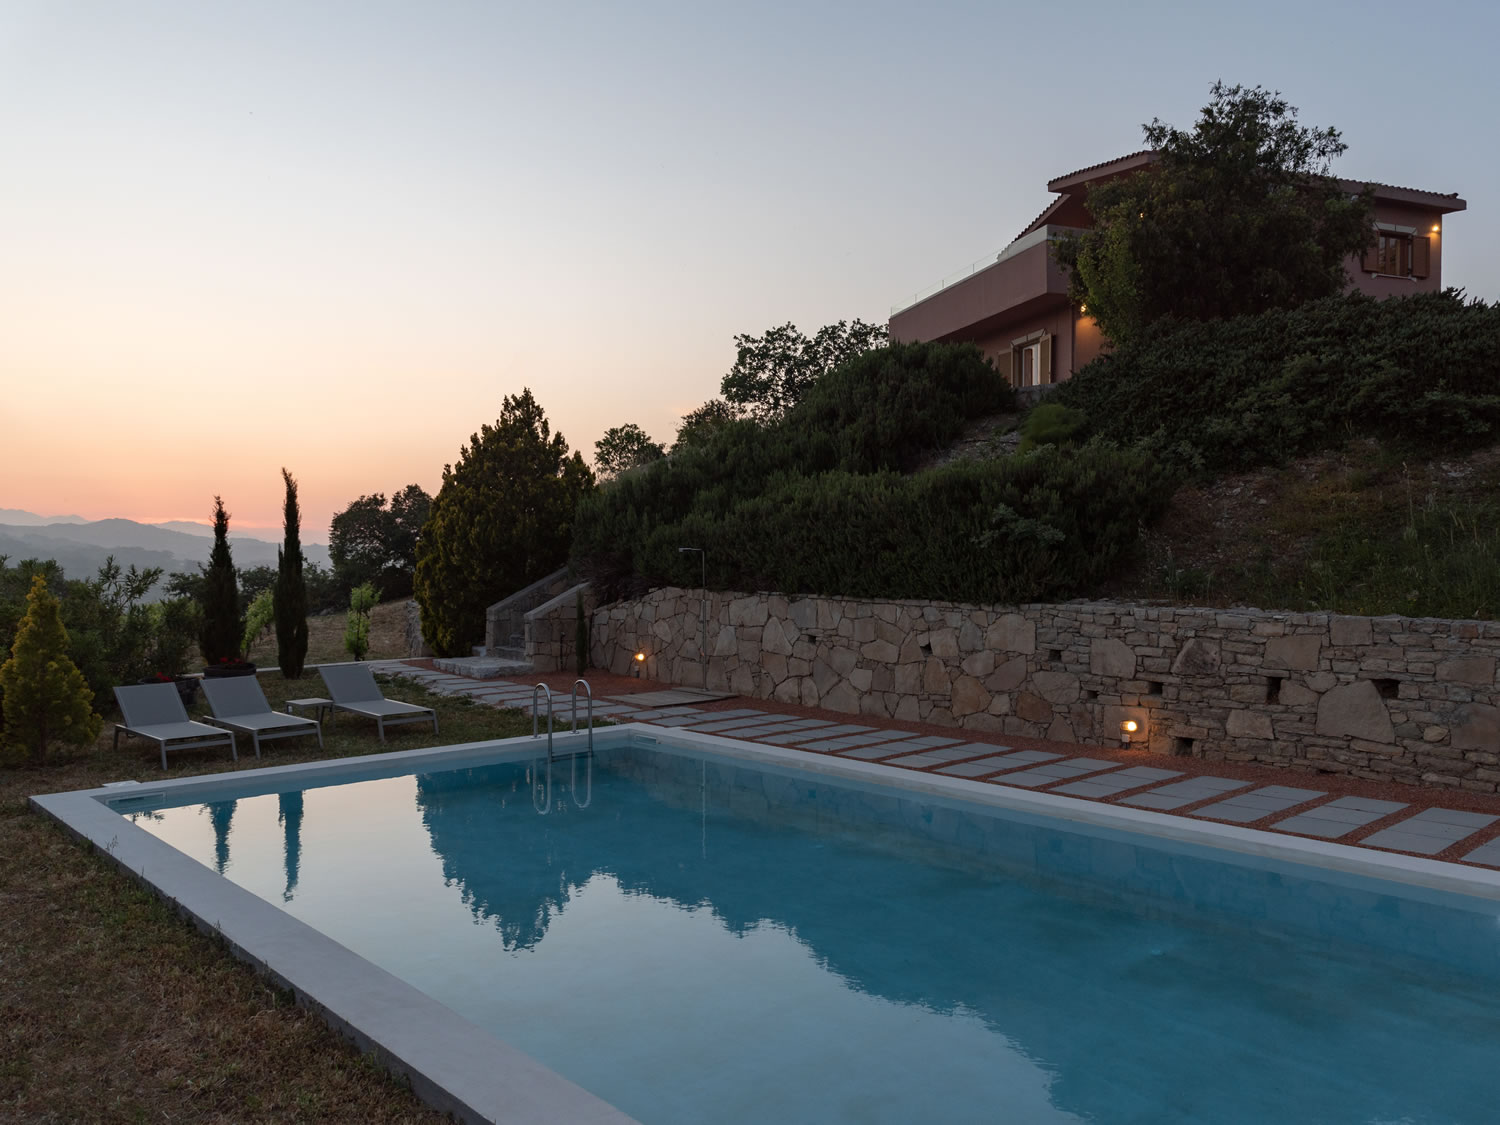 Outdoor Pool Area at Eleonas Estate's Luxury Villa in Crete, Greece